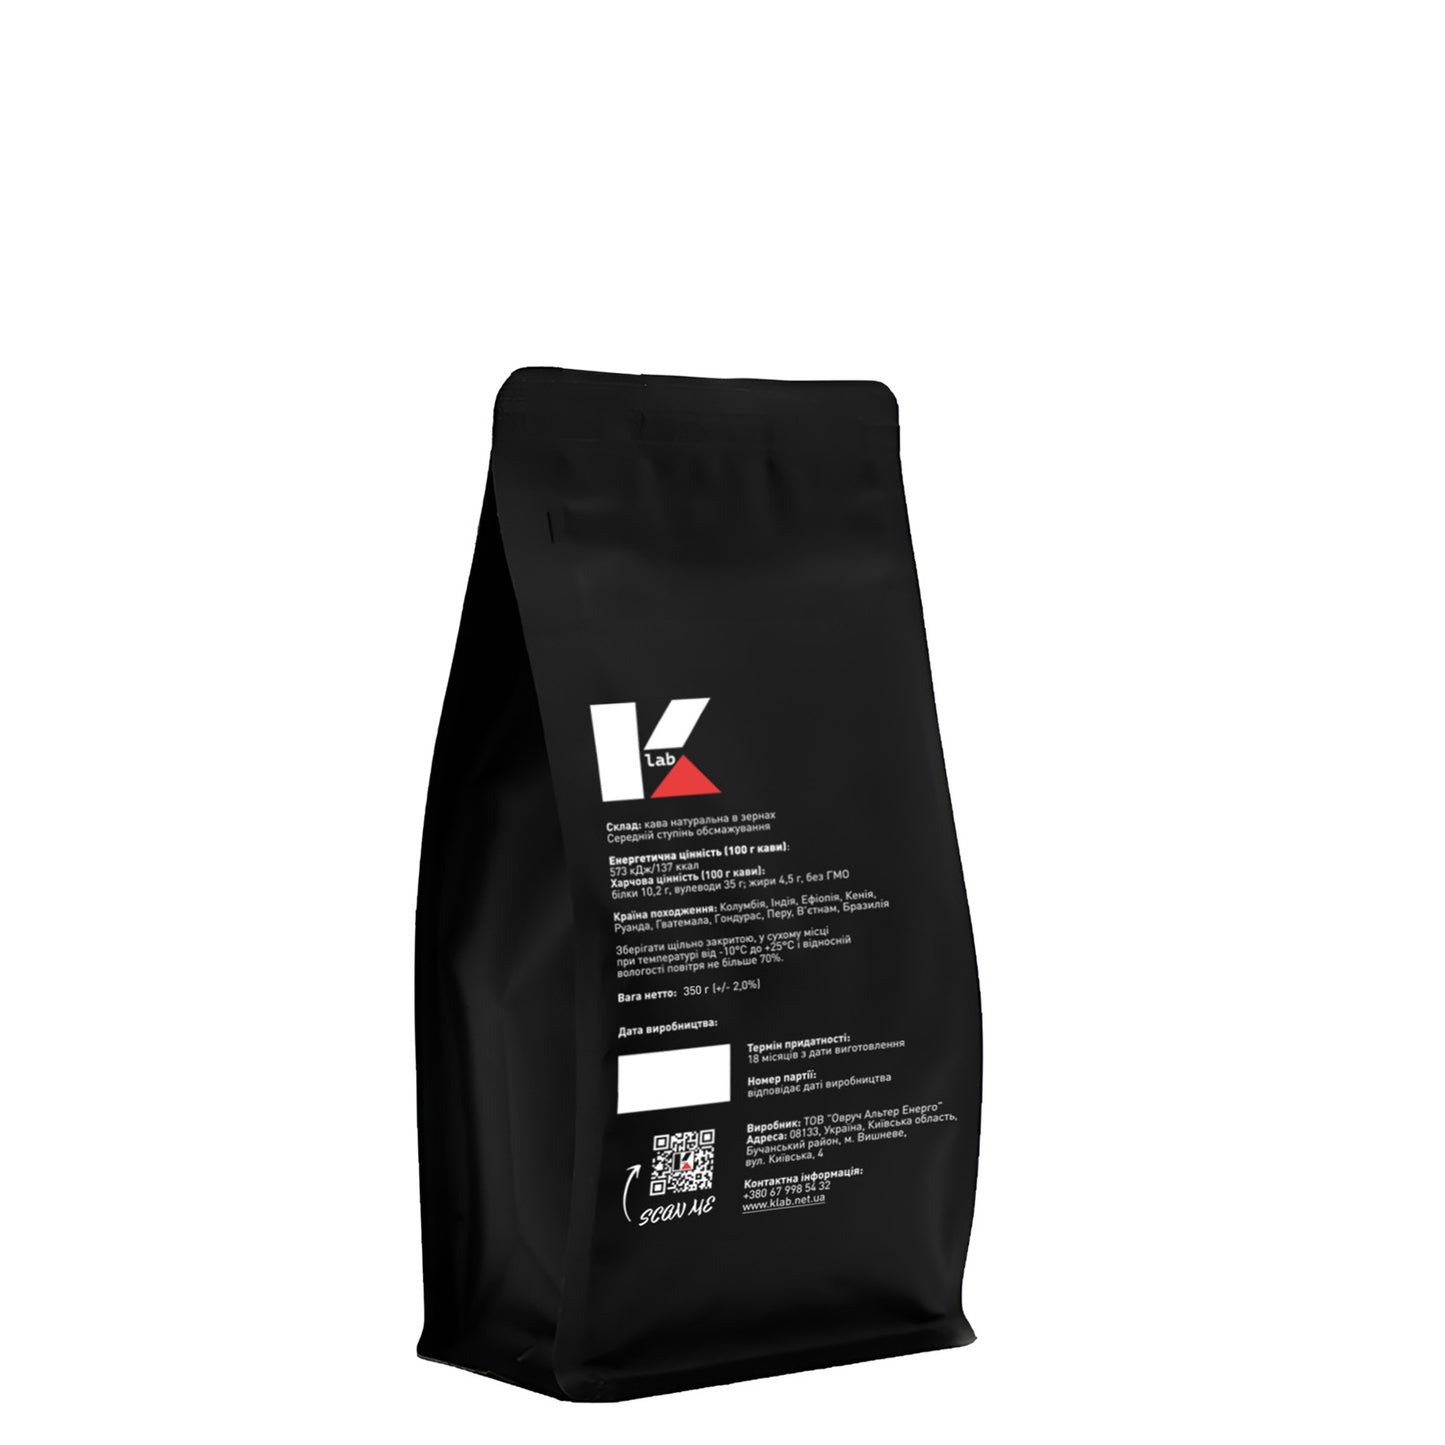 COFFEE STORY №8 - Klab (0.35kg back)